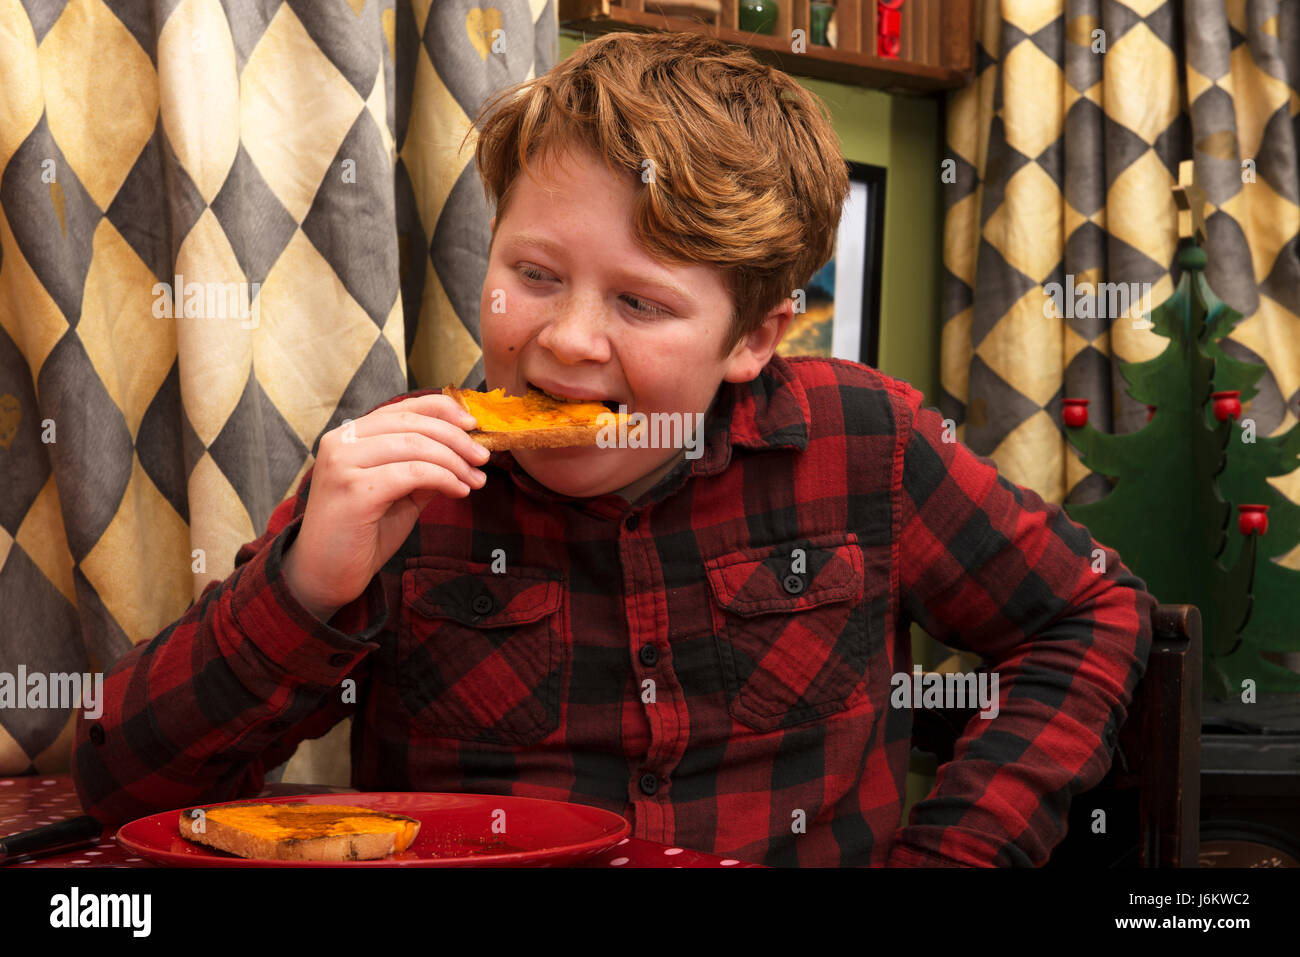 Boy eating cheese on toast Stock Photo